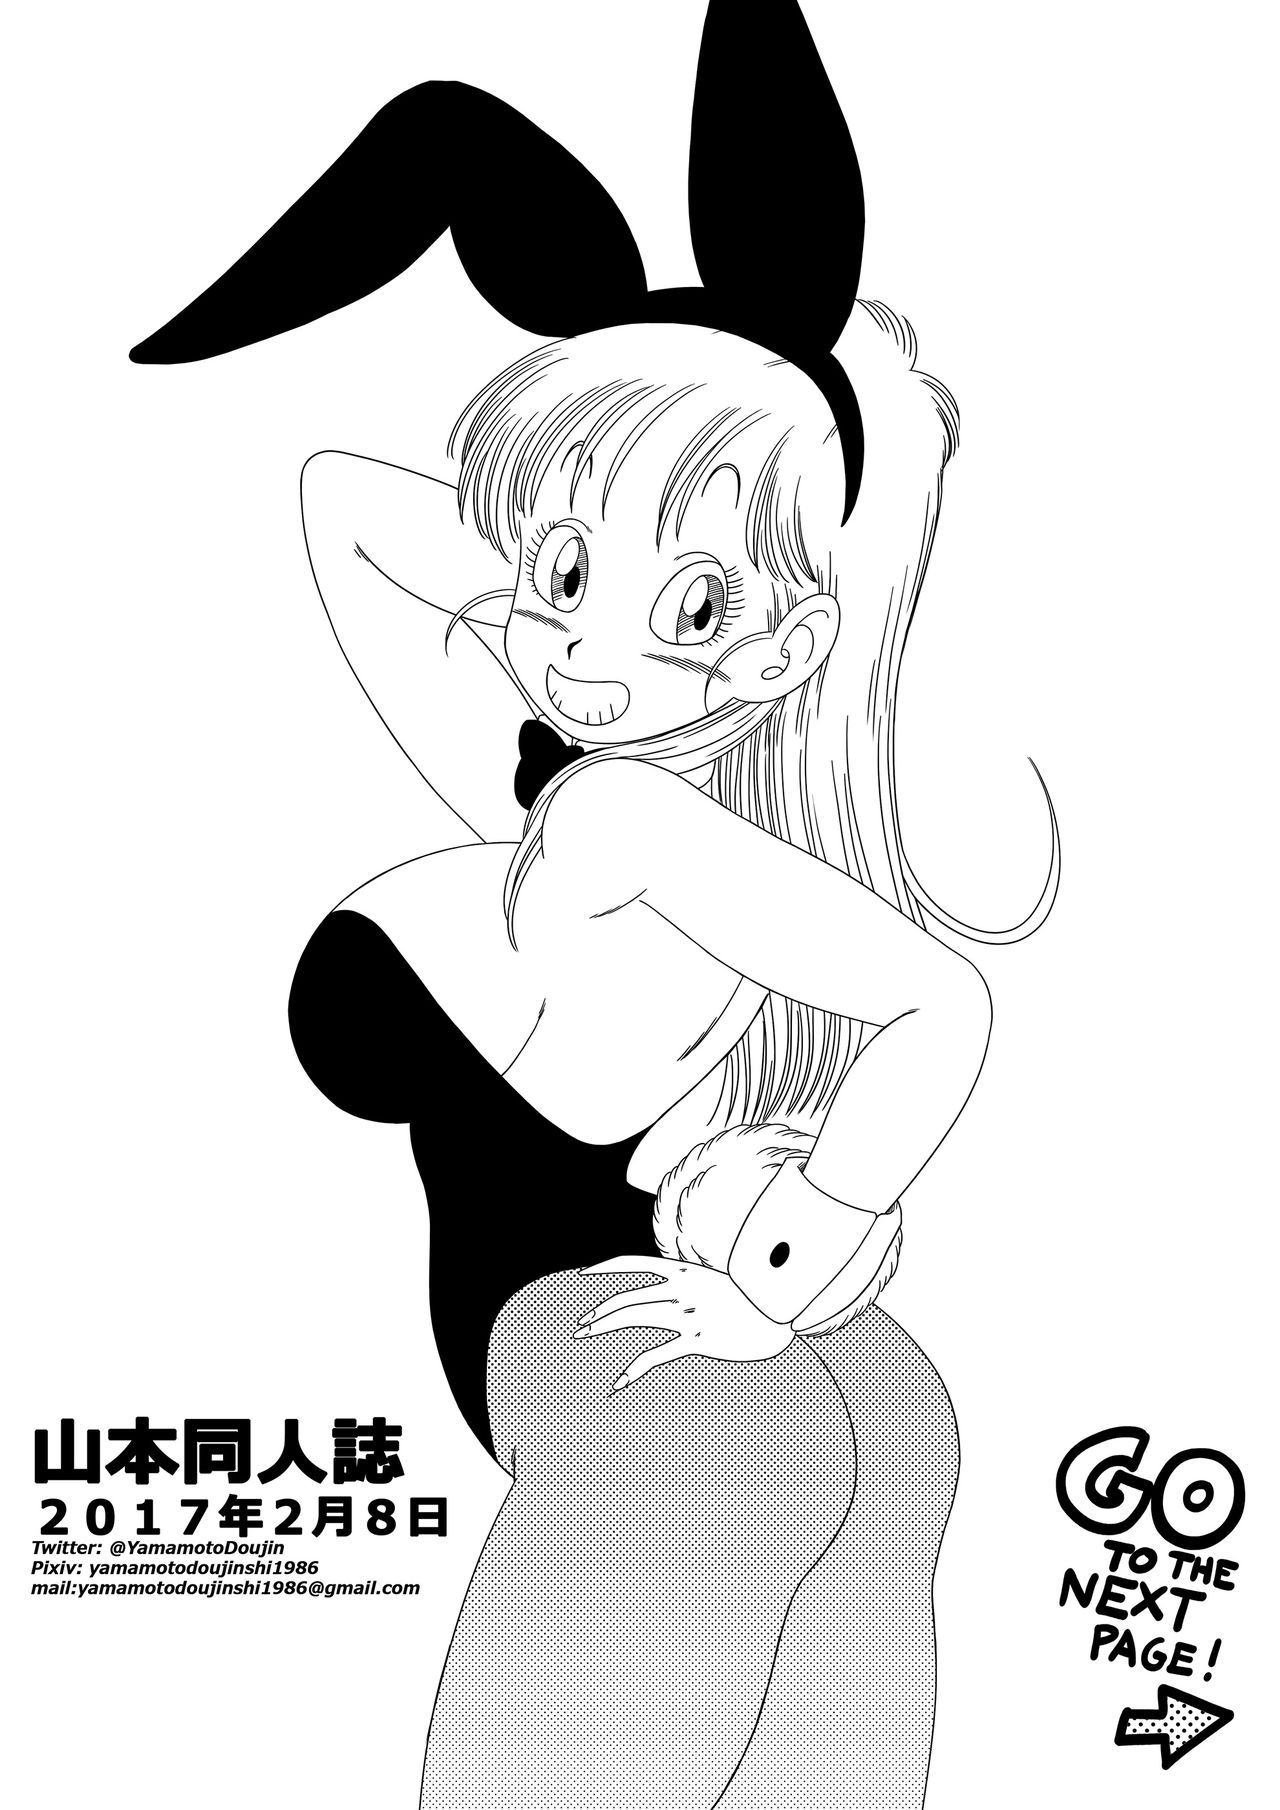 Bunny Girl Transformation - 20